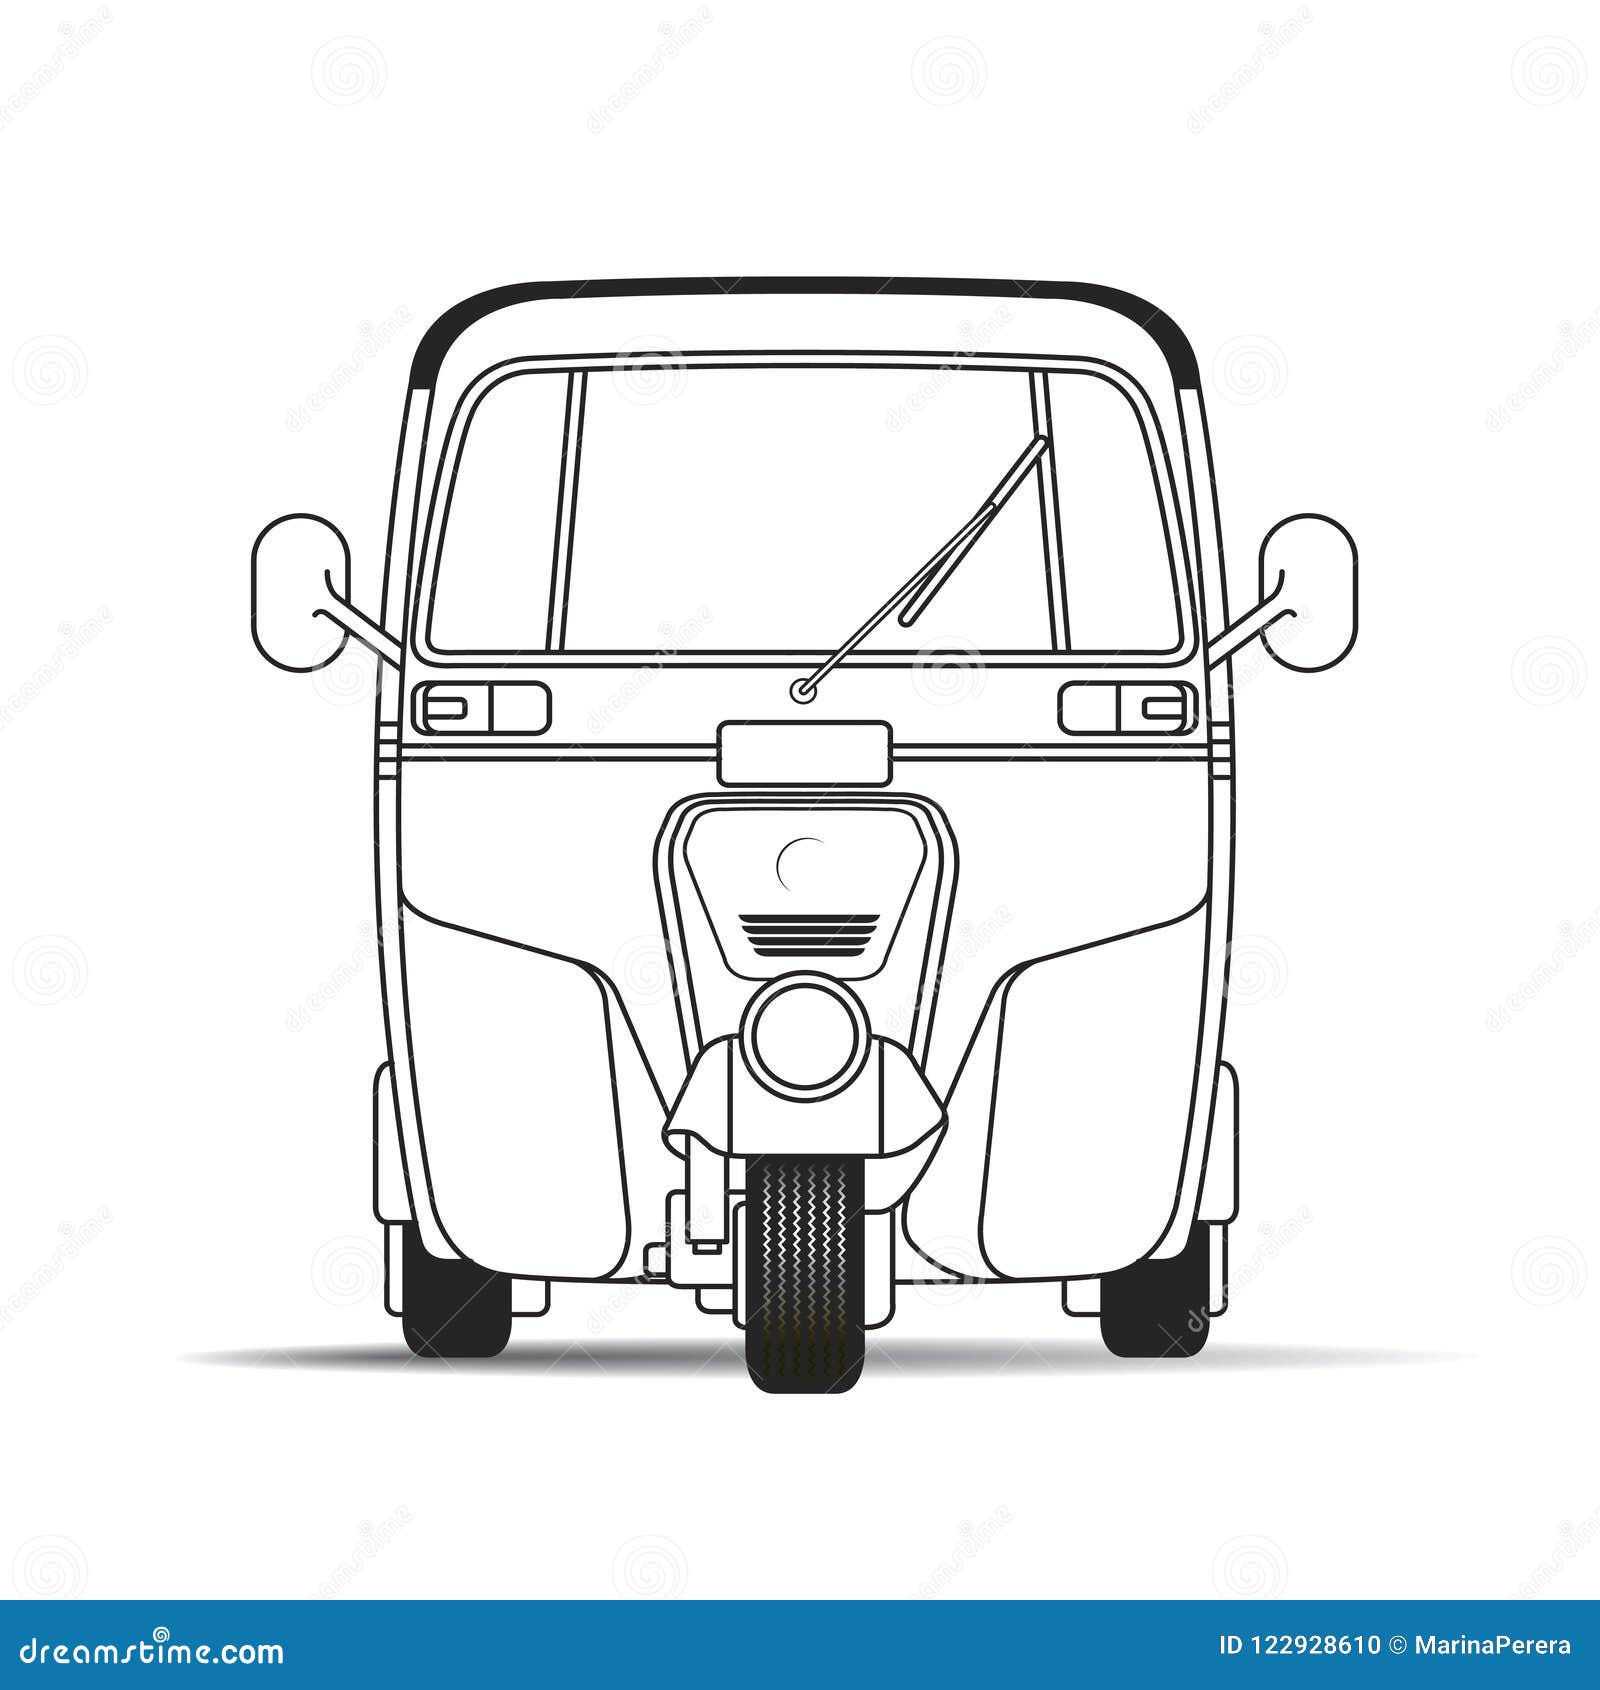 920 Auto rickshaw Vector Images | Depositphotos